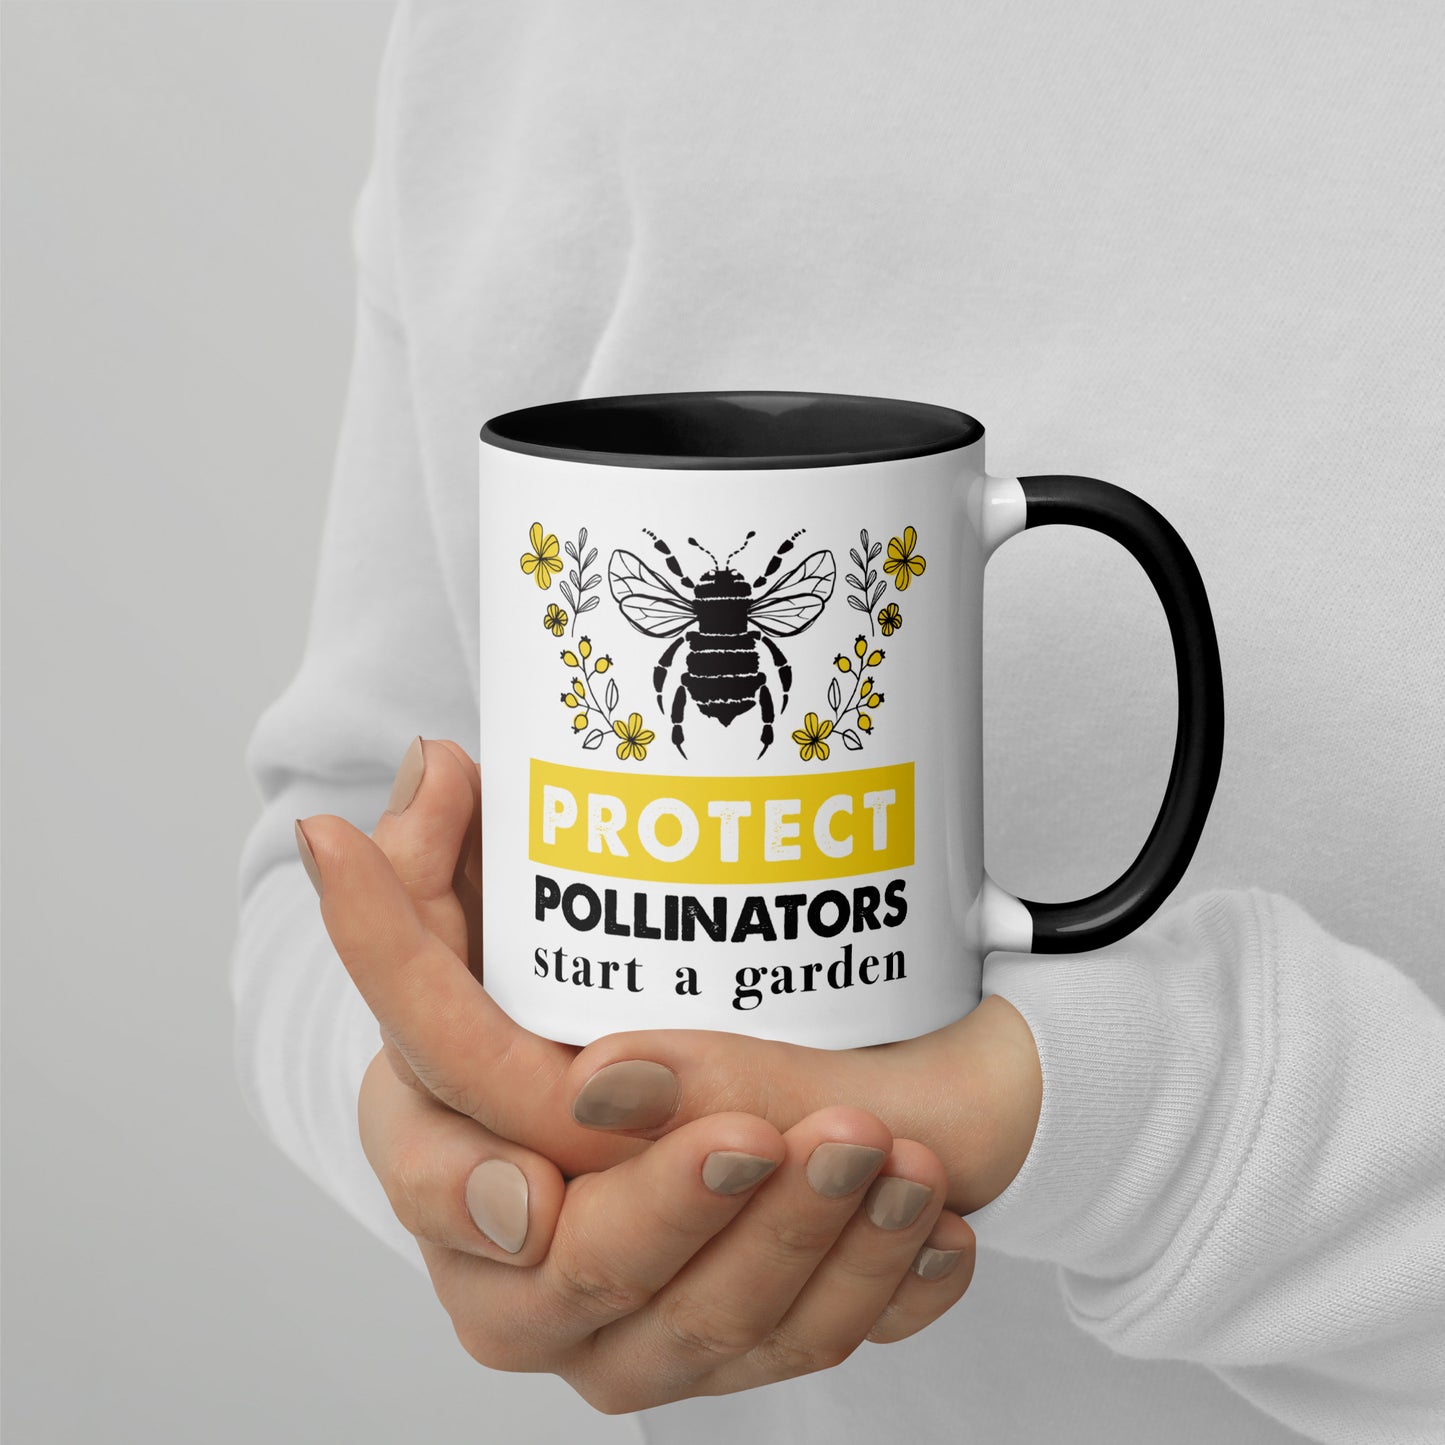 "Protect Pollinators Start a Garden" 11oz. Mug